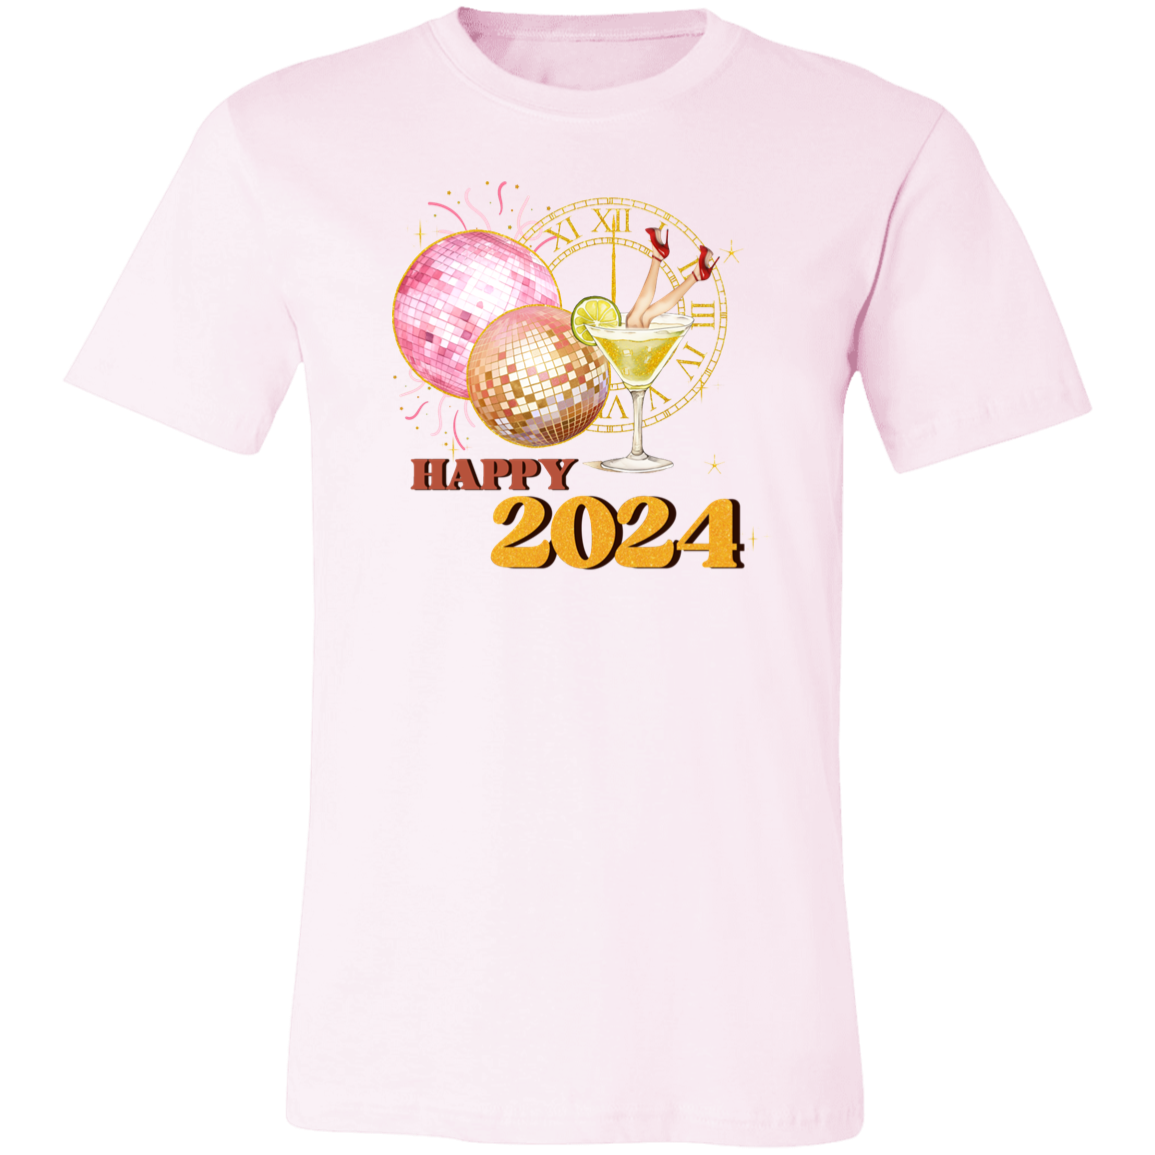 Happy 2024 Shirt